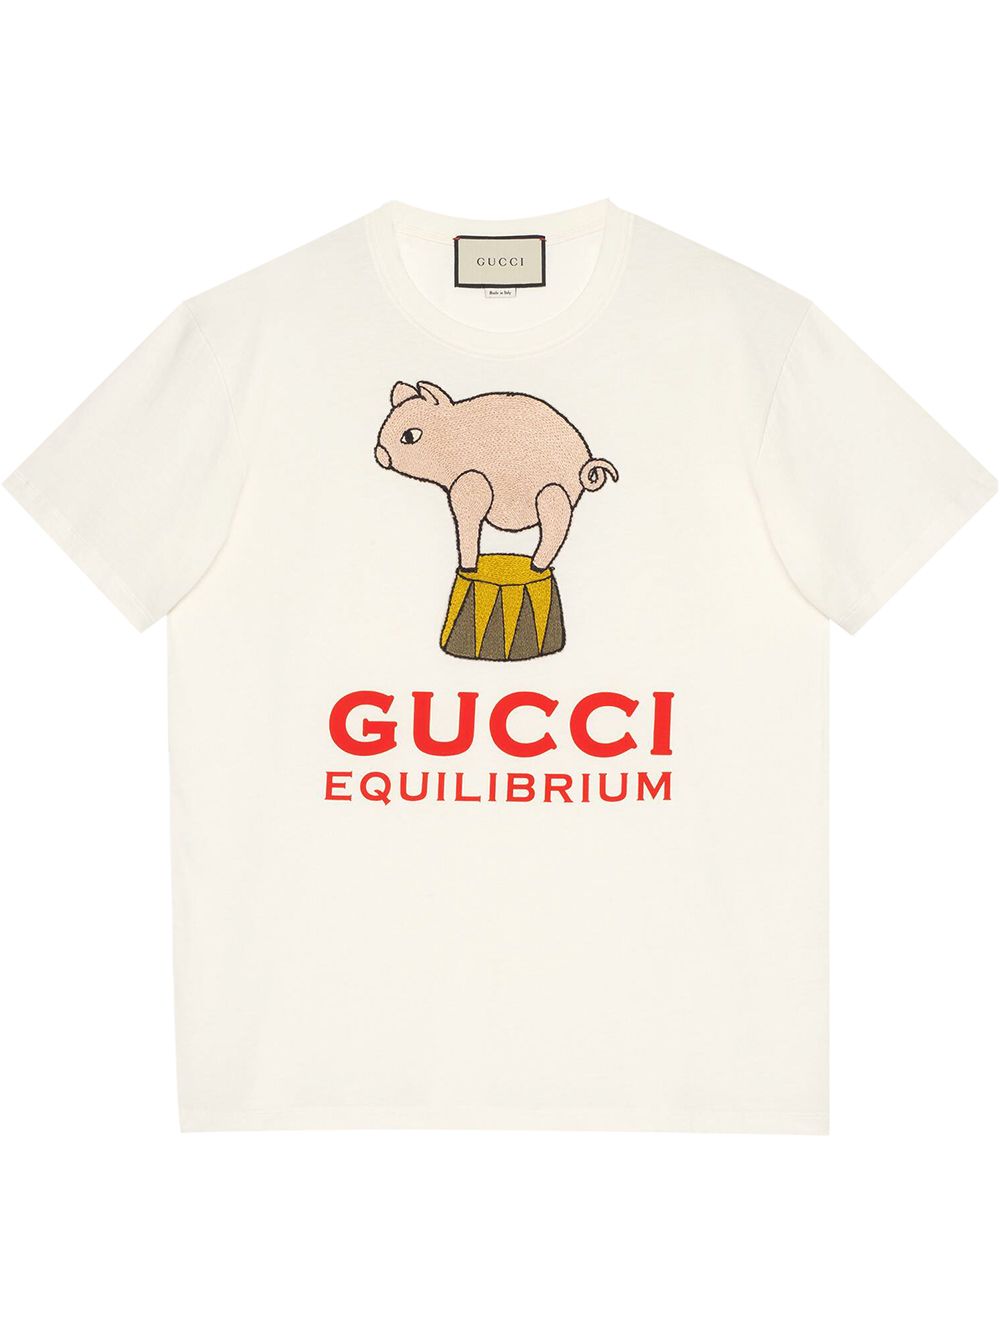 Gucci Gucci Equilibrium Oversize T-shirt - Farfetch